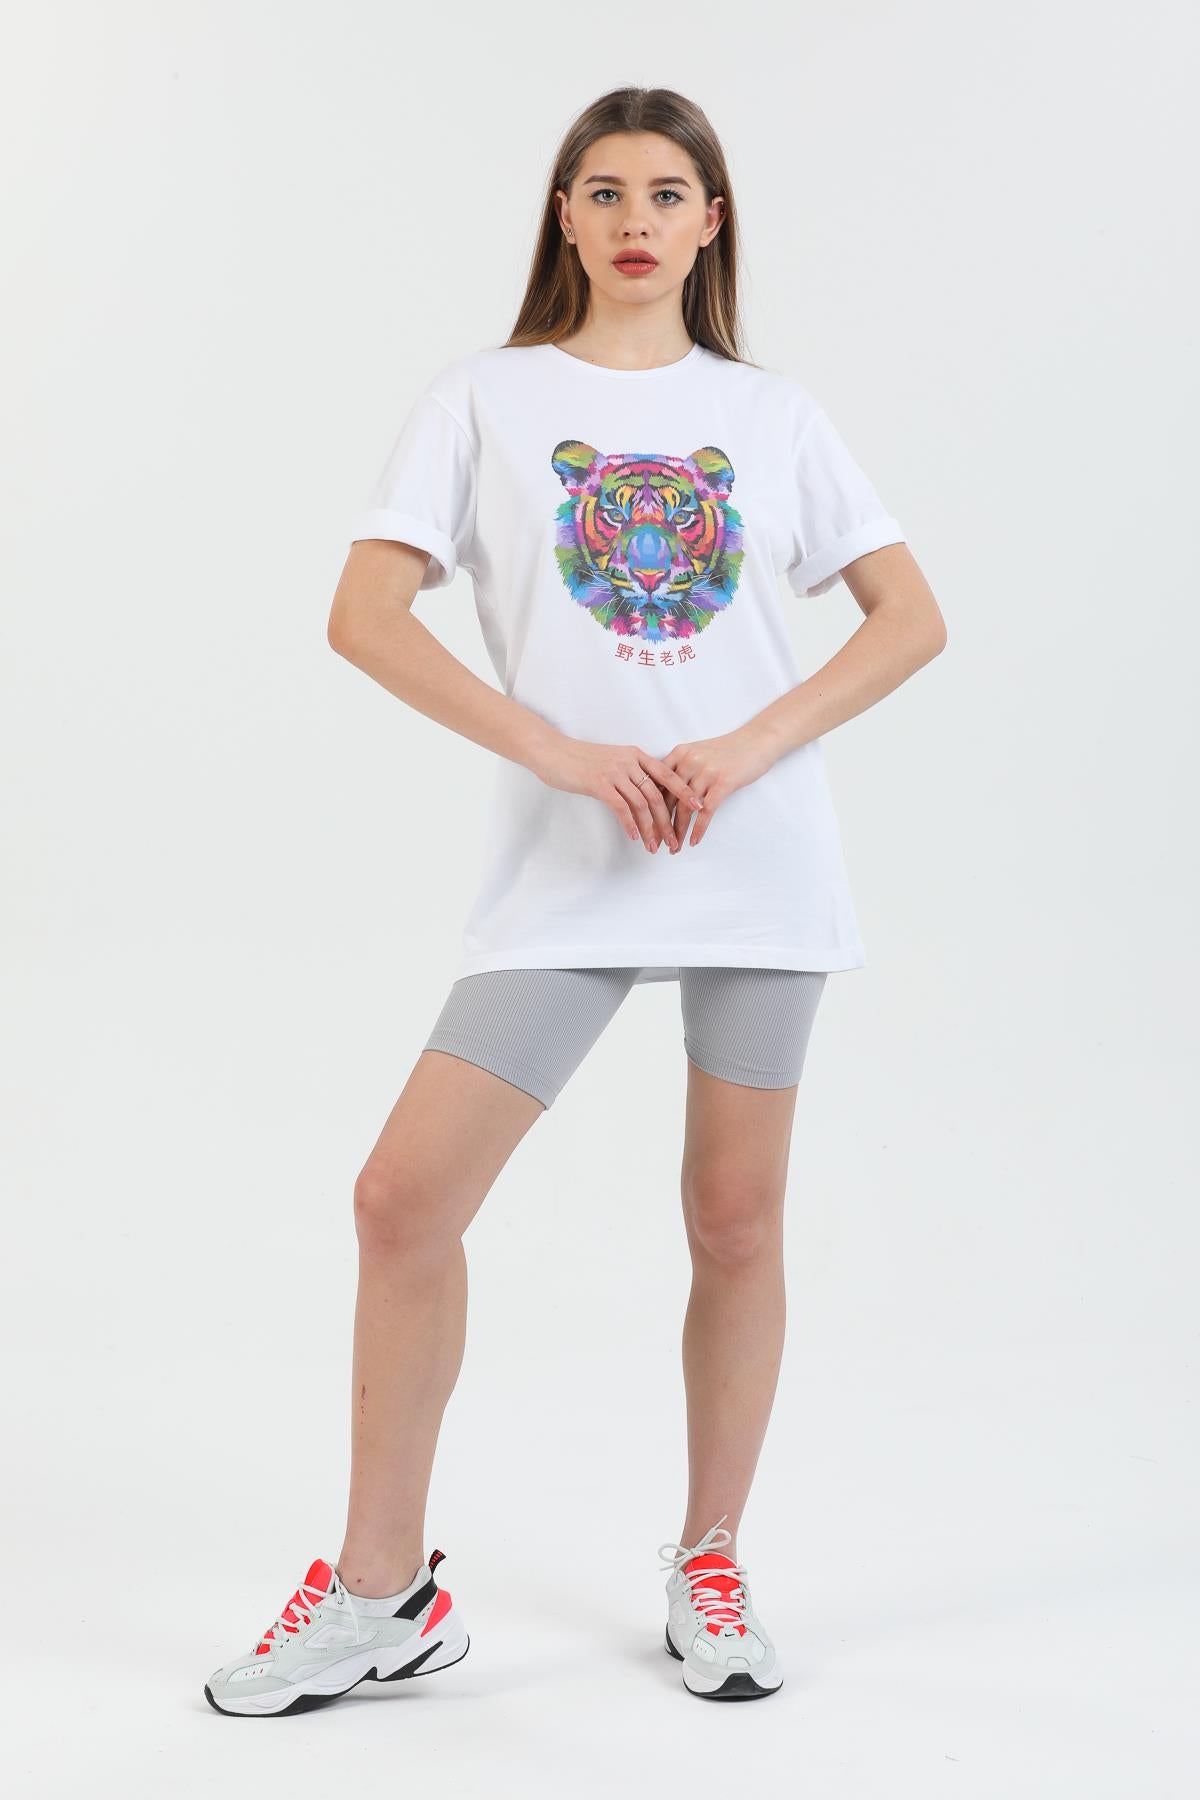 Colorful lion printed cotton Crew Neck overwoman female t -shirt.